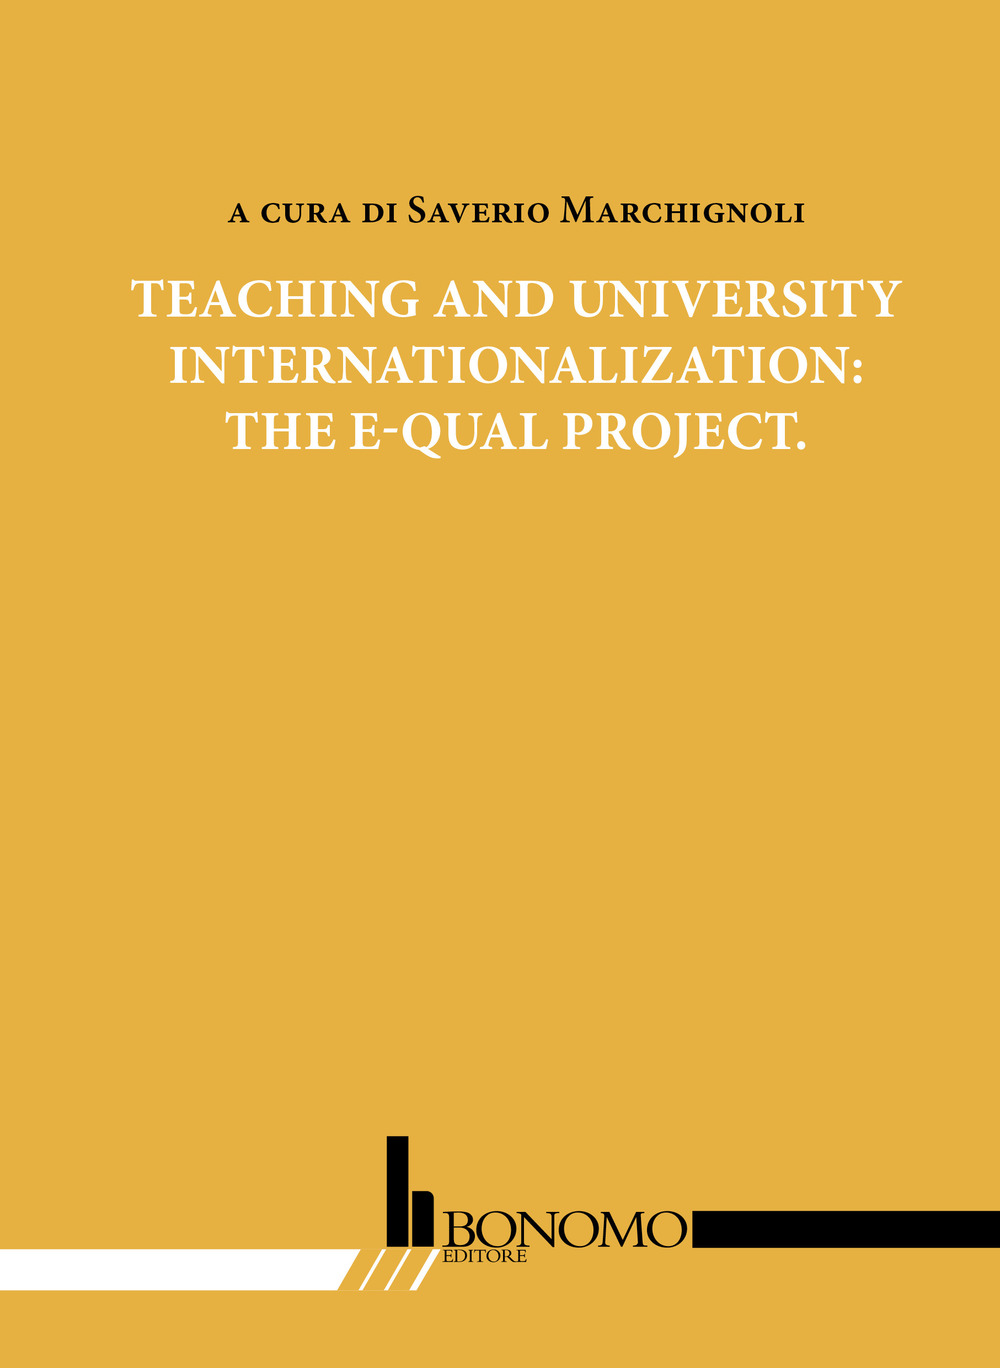 Teaching and university internationalization: the e-qual project